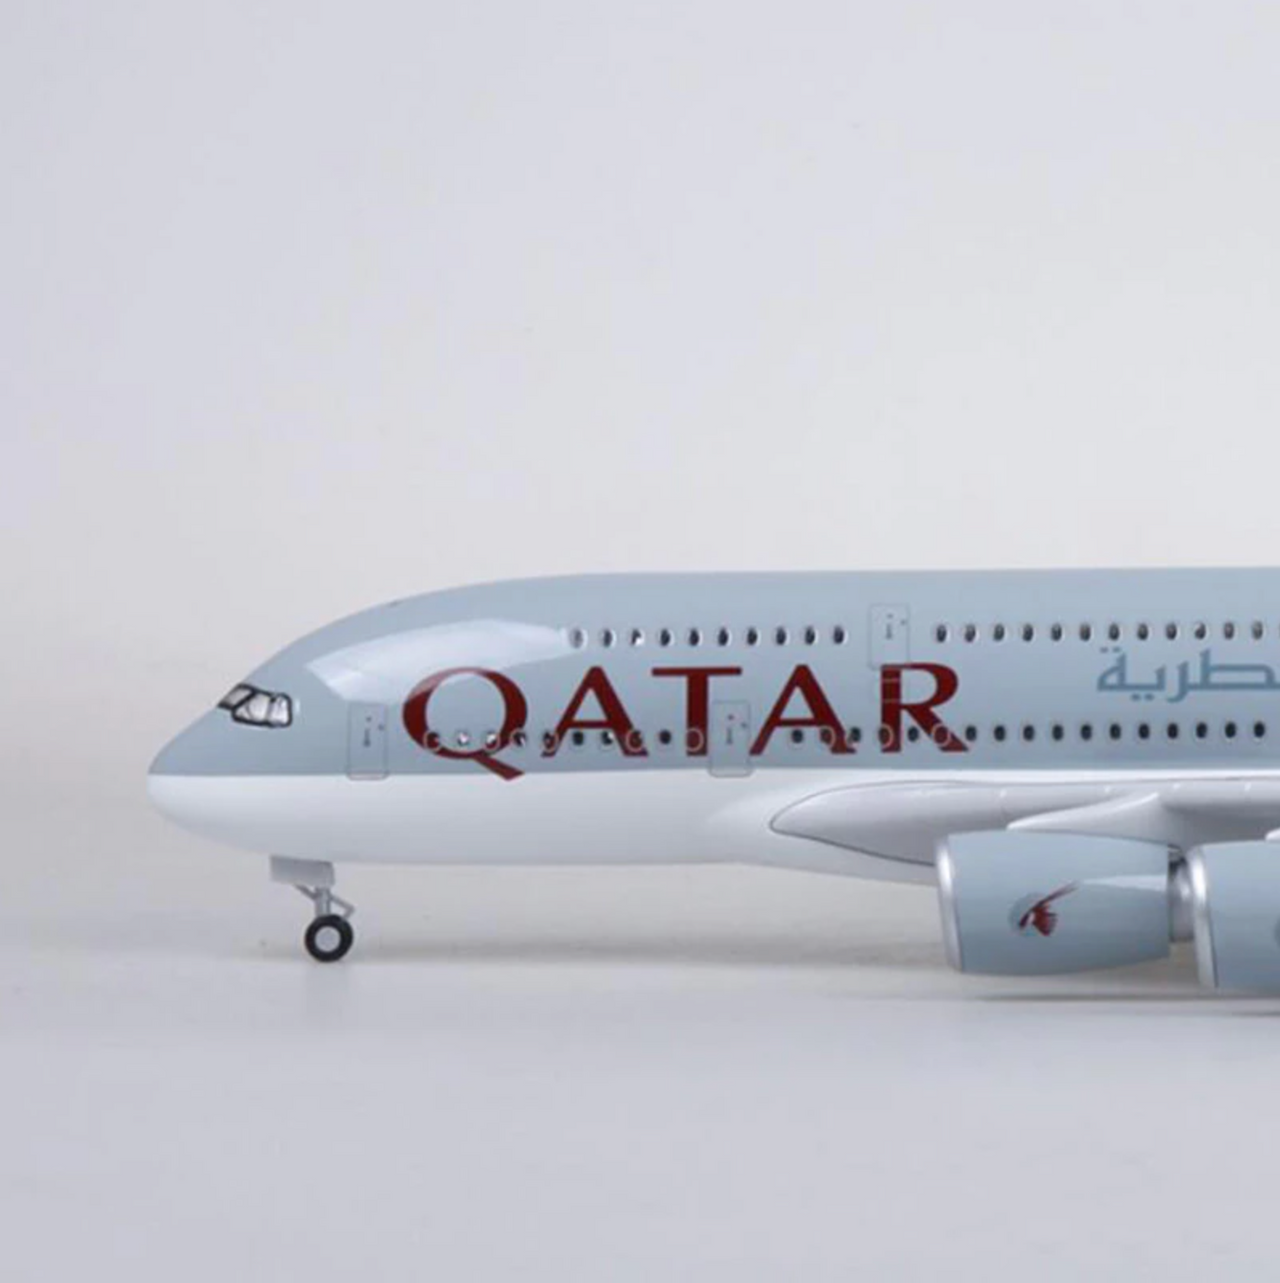 Qatar Airways Airbus A380 Airplane Model (1/160 Scale)